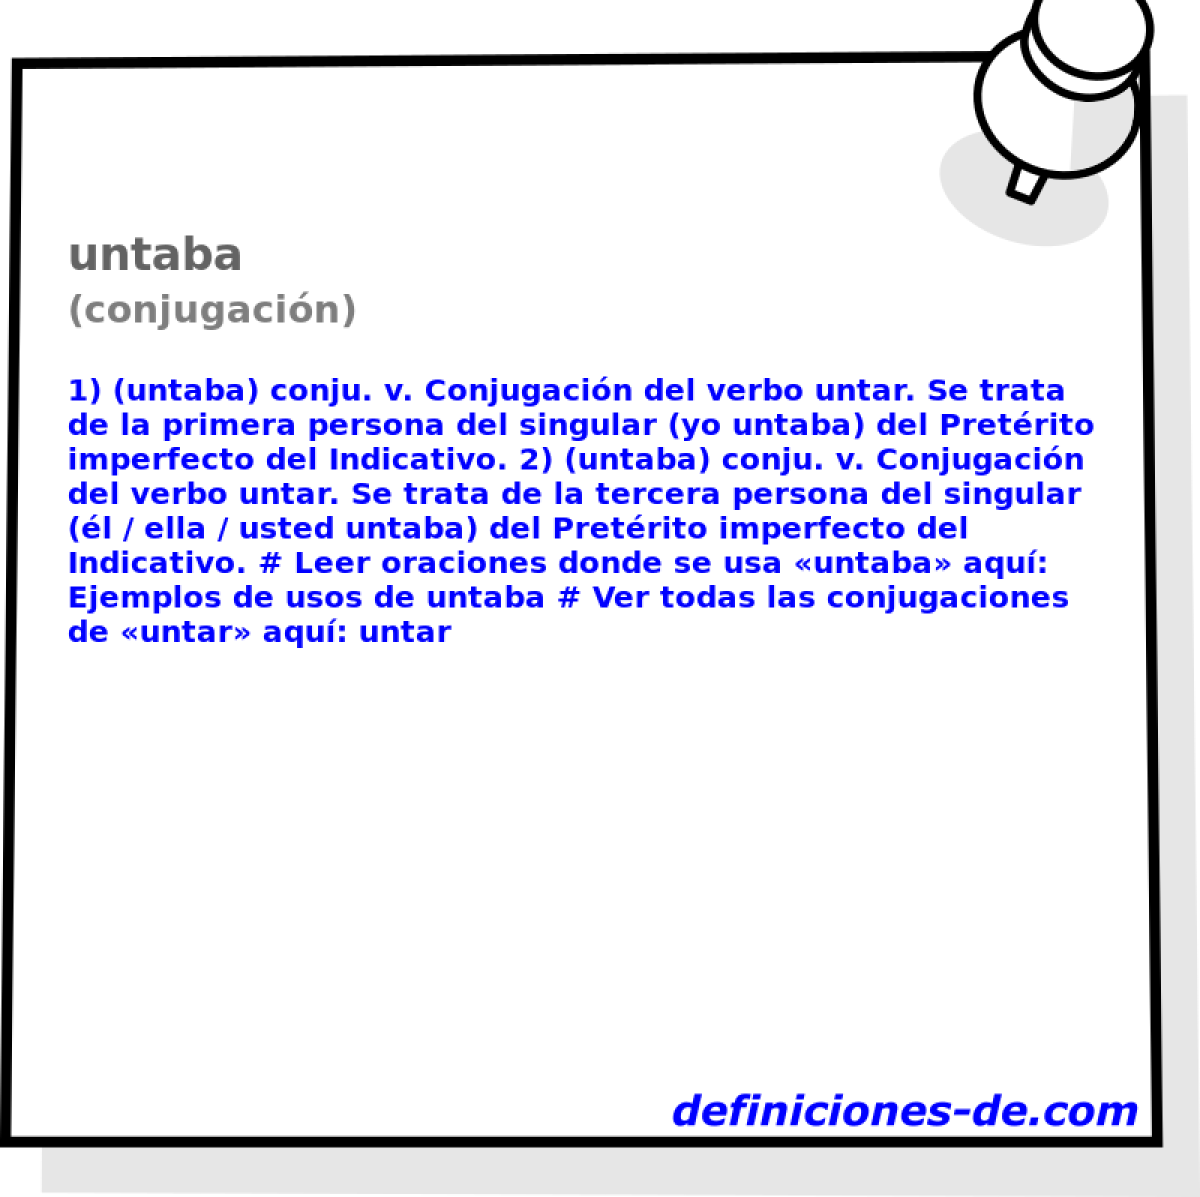 untaba (conjugacin)